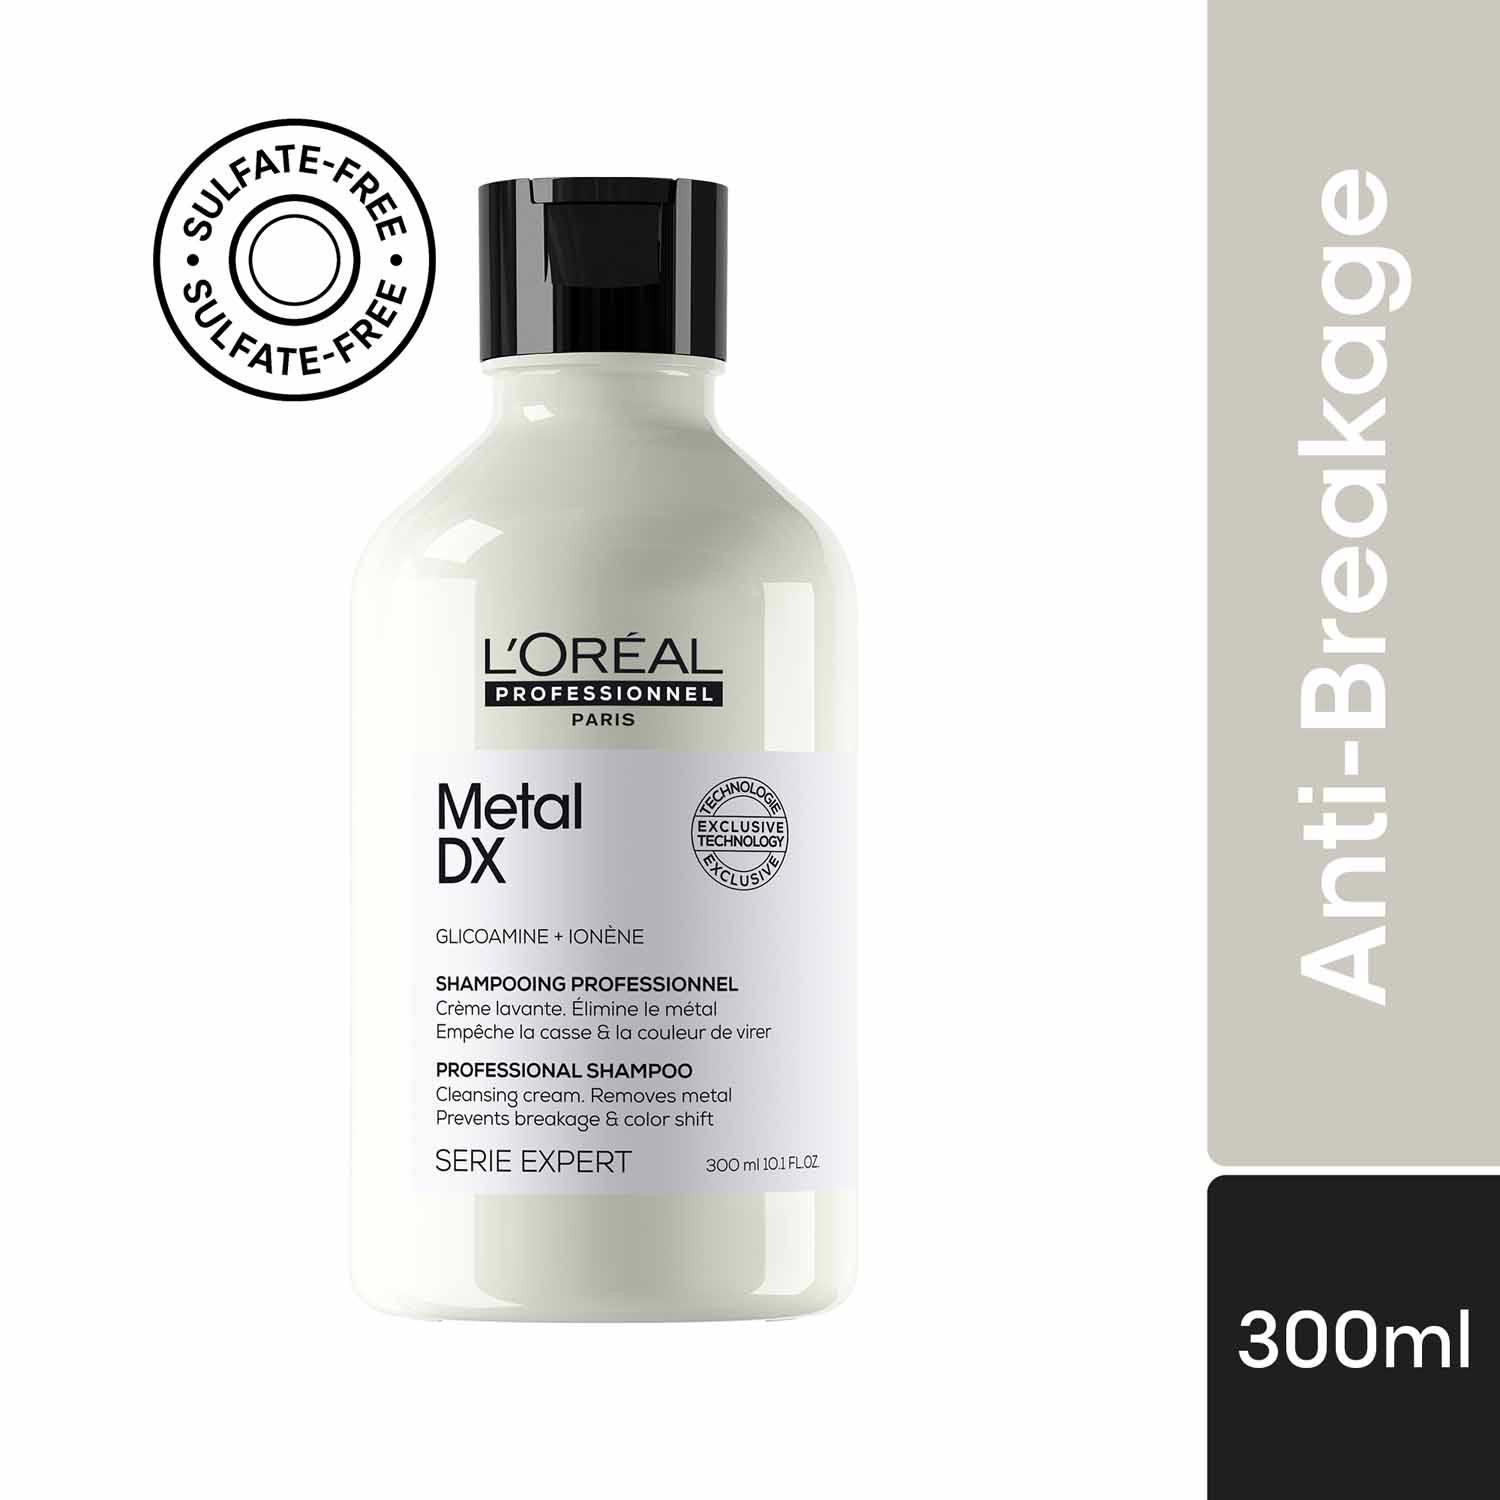 L'Oreal Professionnel | L'Oreal Professionnel Serie Expert Metal DX Anti-Metal Cleansing Cream Shampoo (300ml)